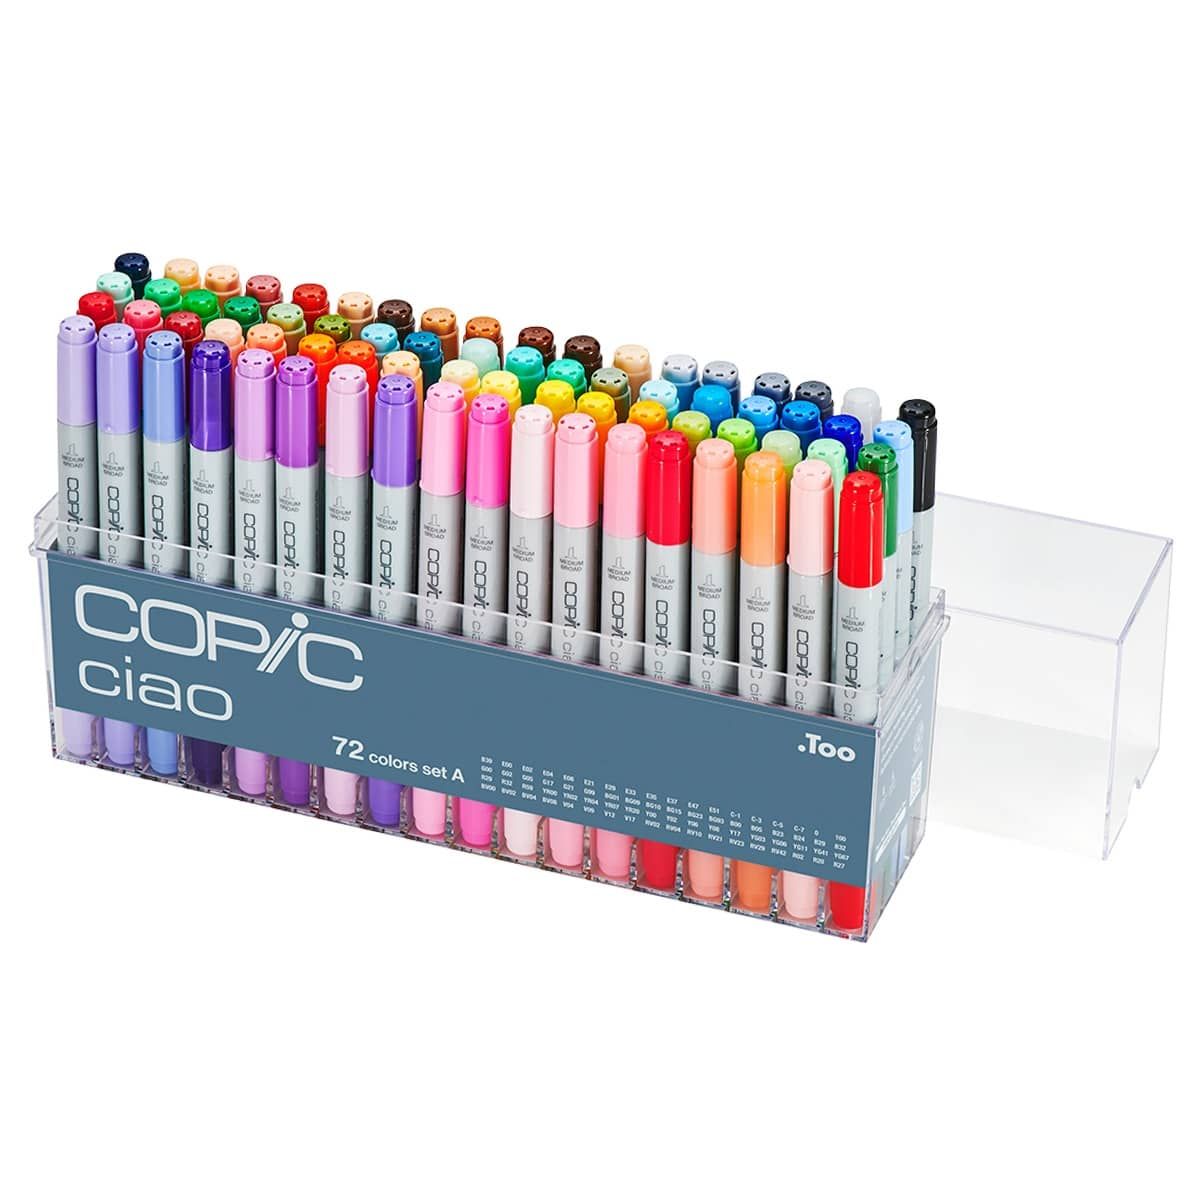 Copic Sketch Marker 72 Color Set C Premium Artist Markers 